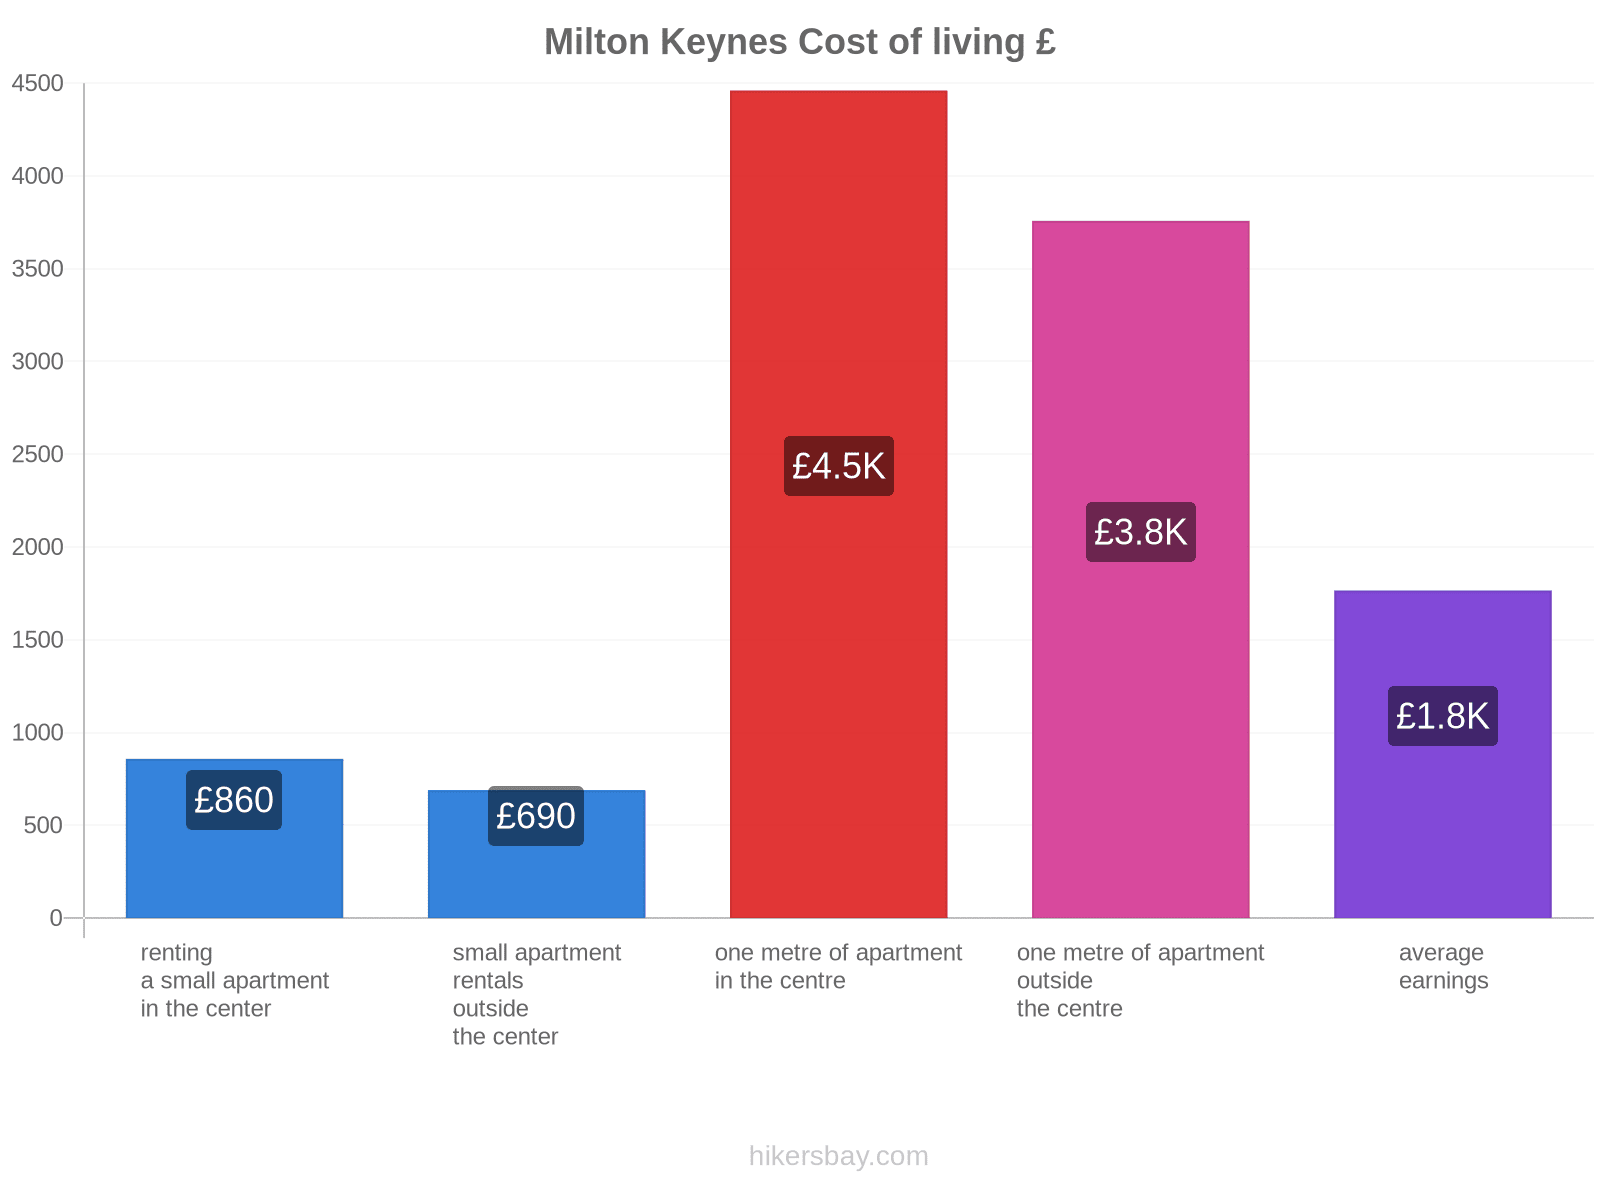 Milton Keynes cost of living hikersbay.com